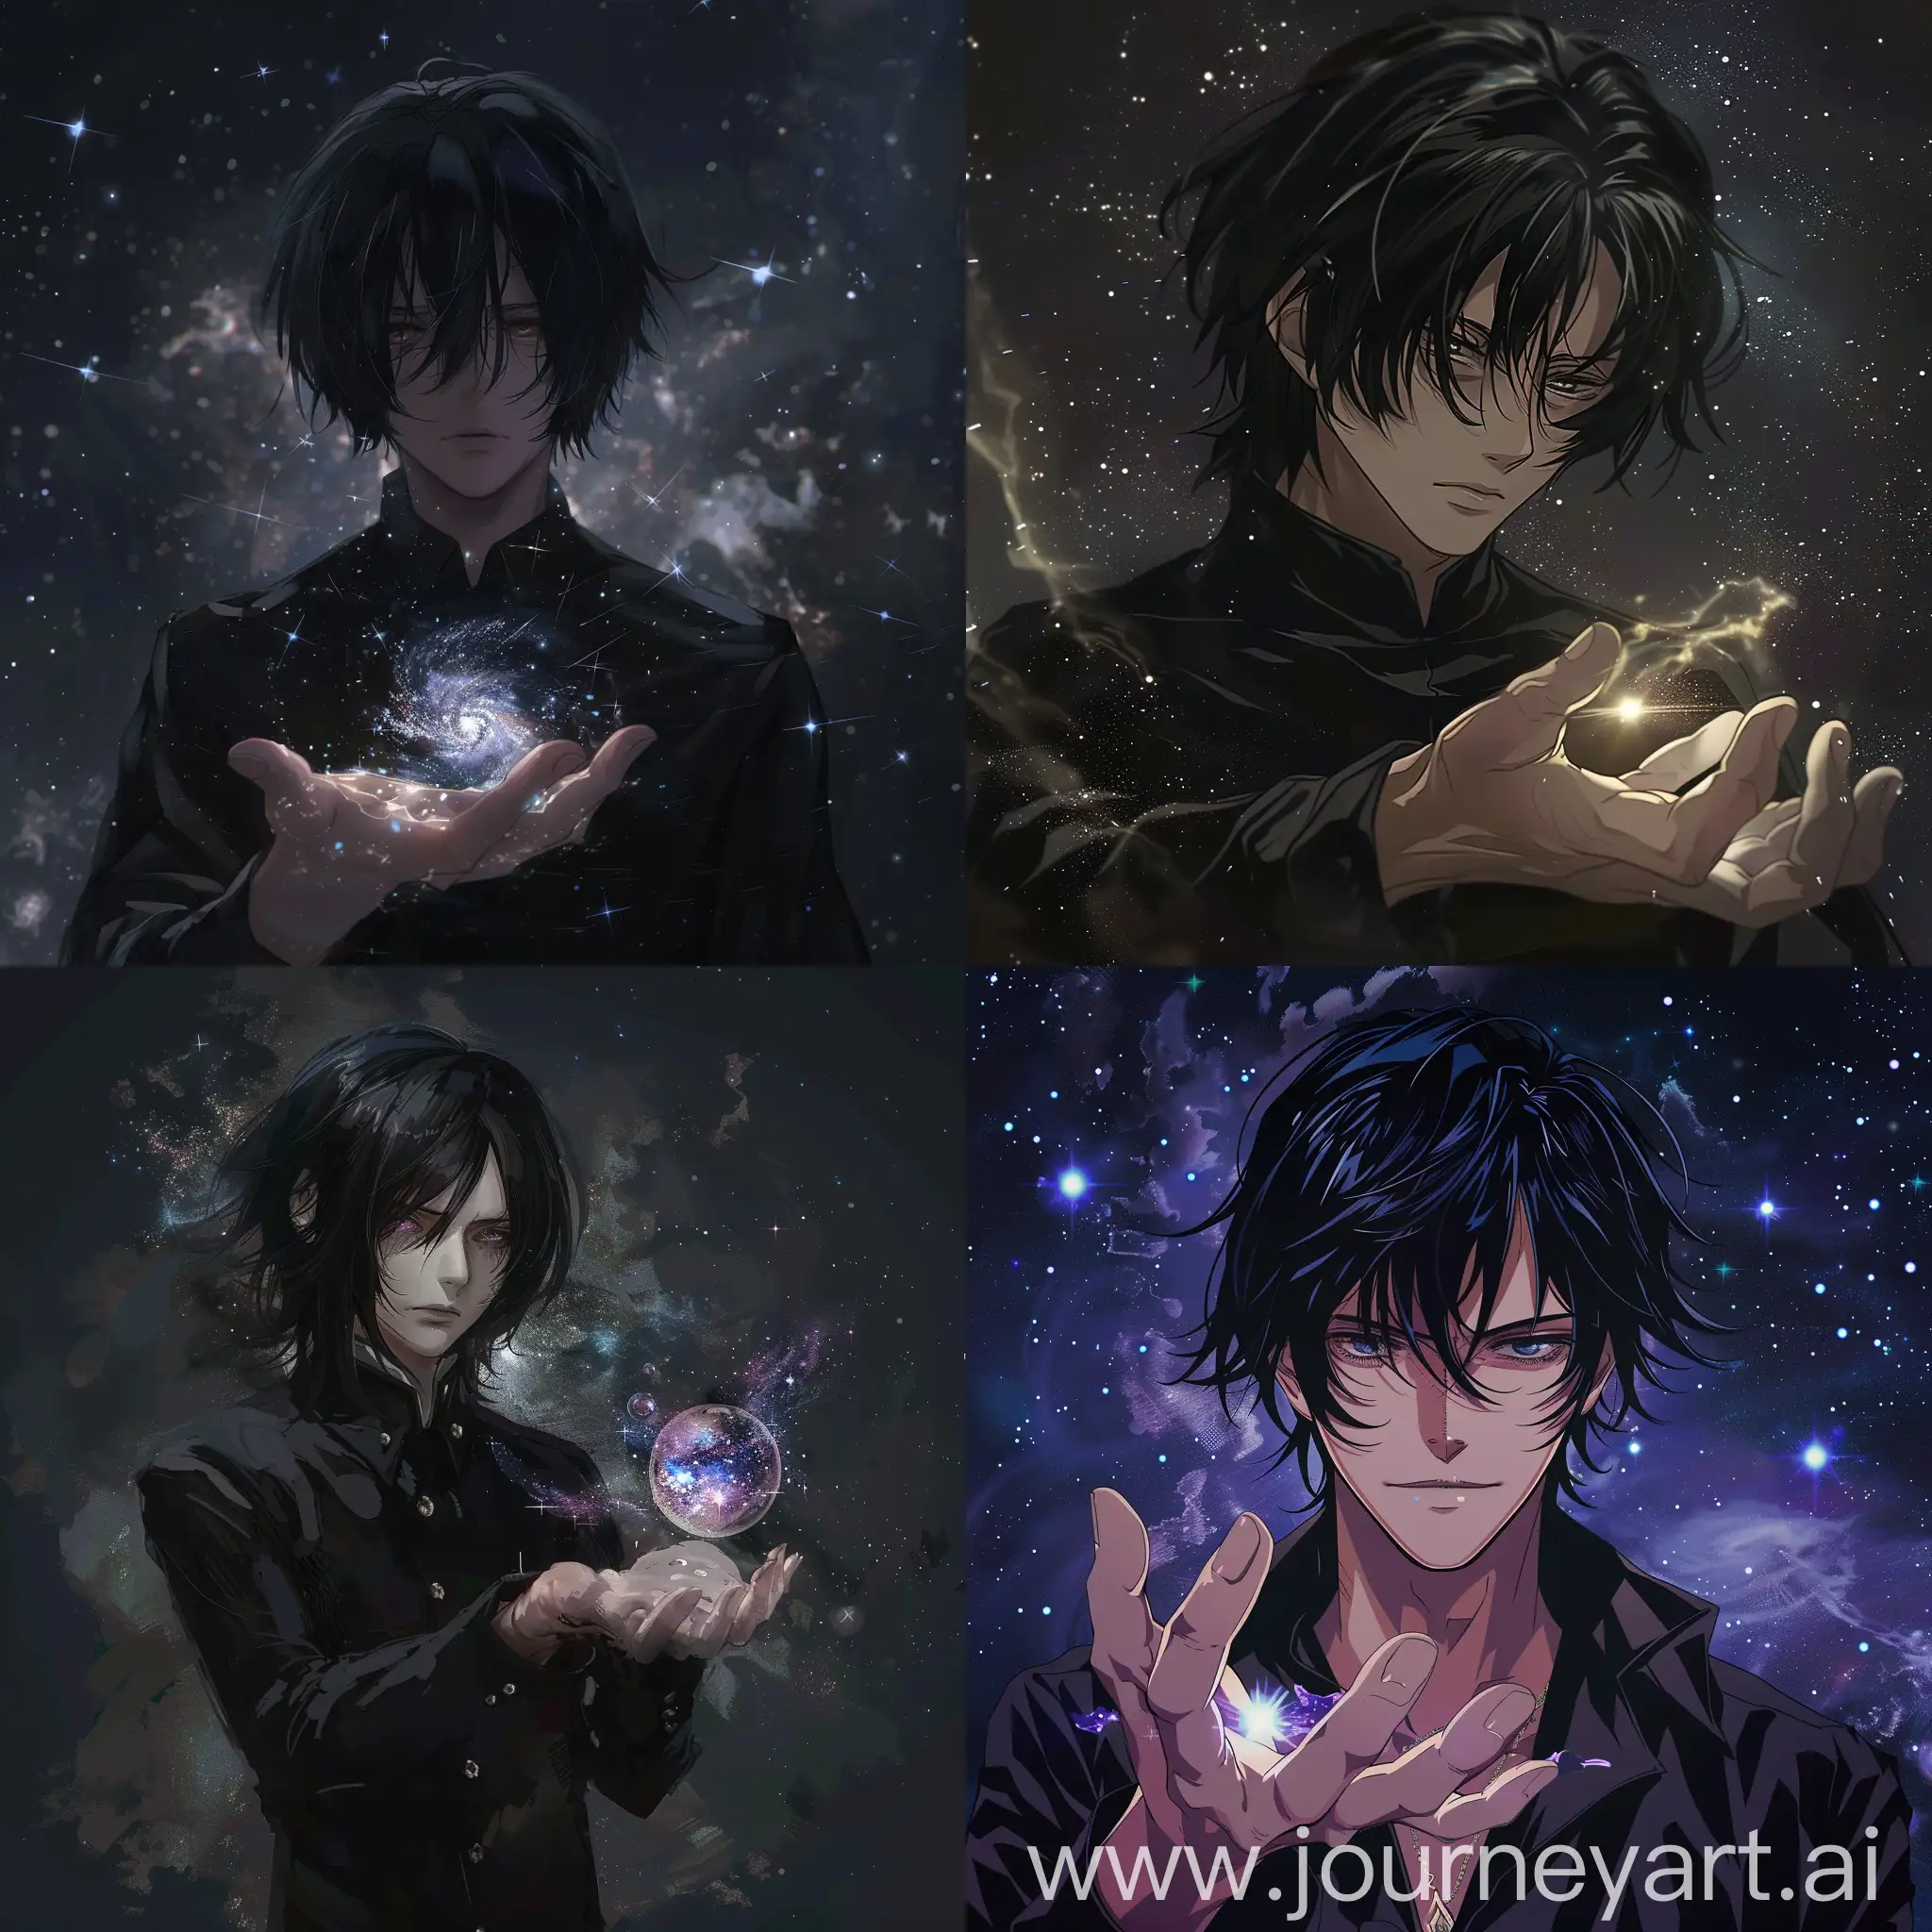 Arrogant-Anime-Character-Holding-Universe-in-Dark-Void